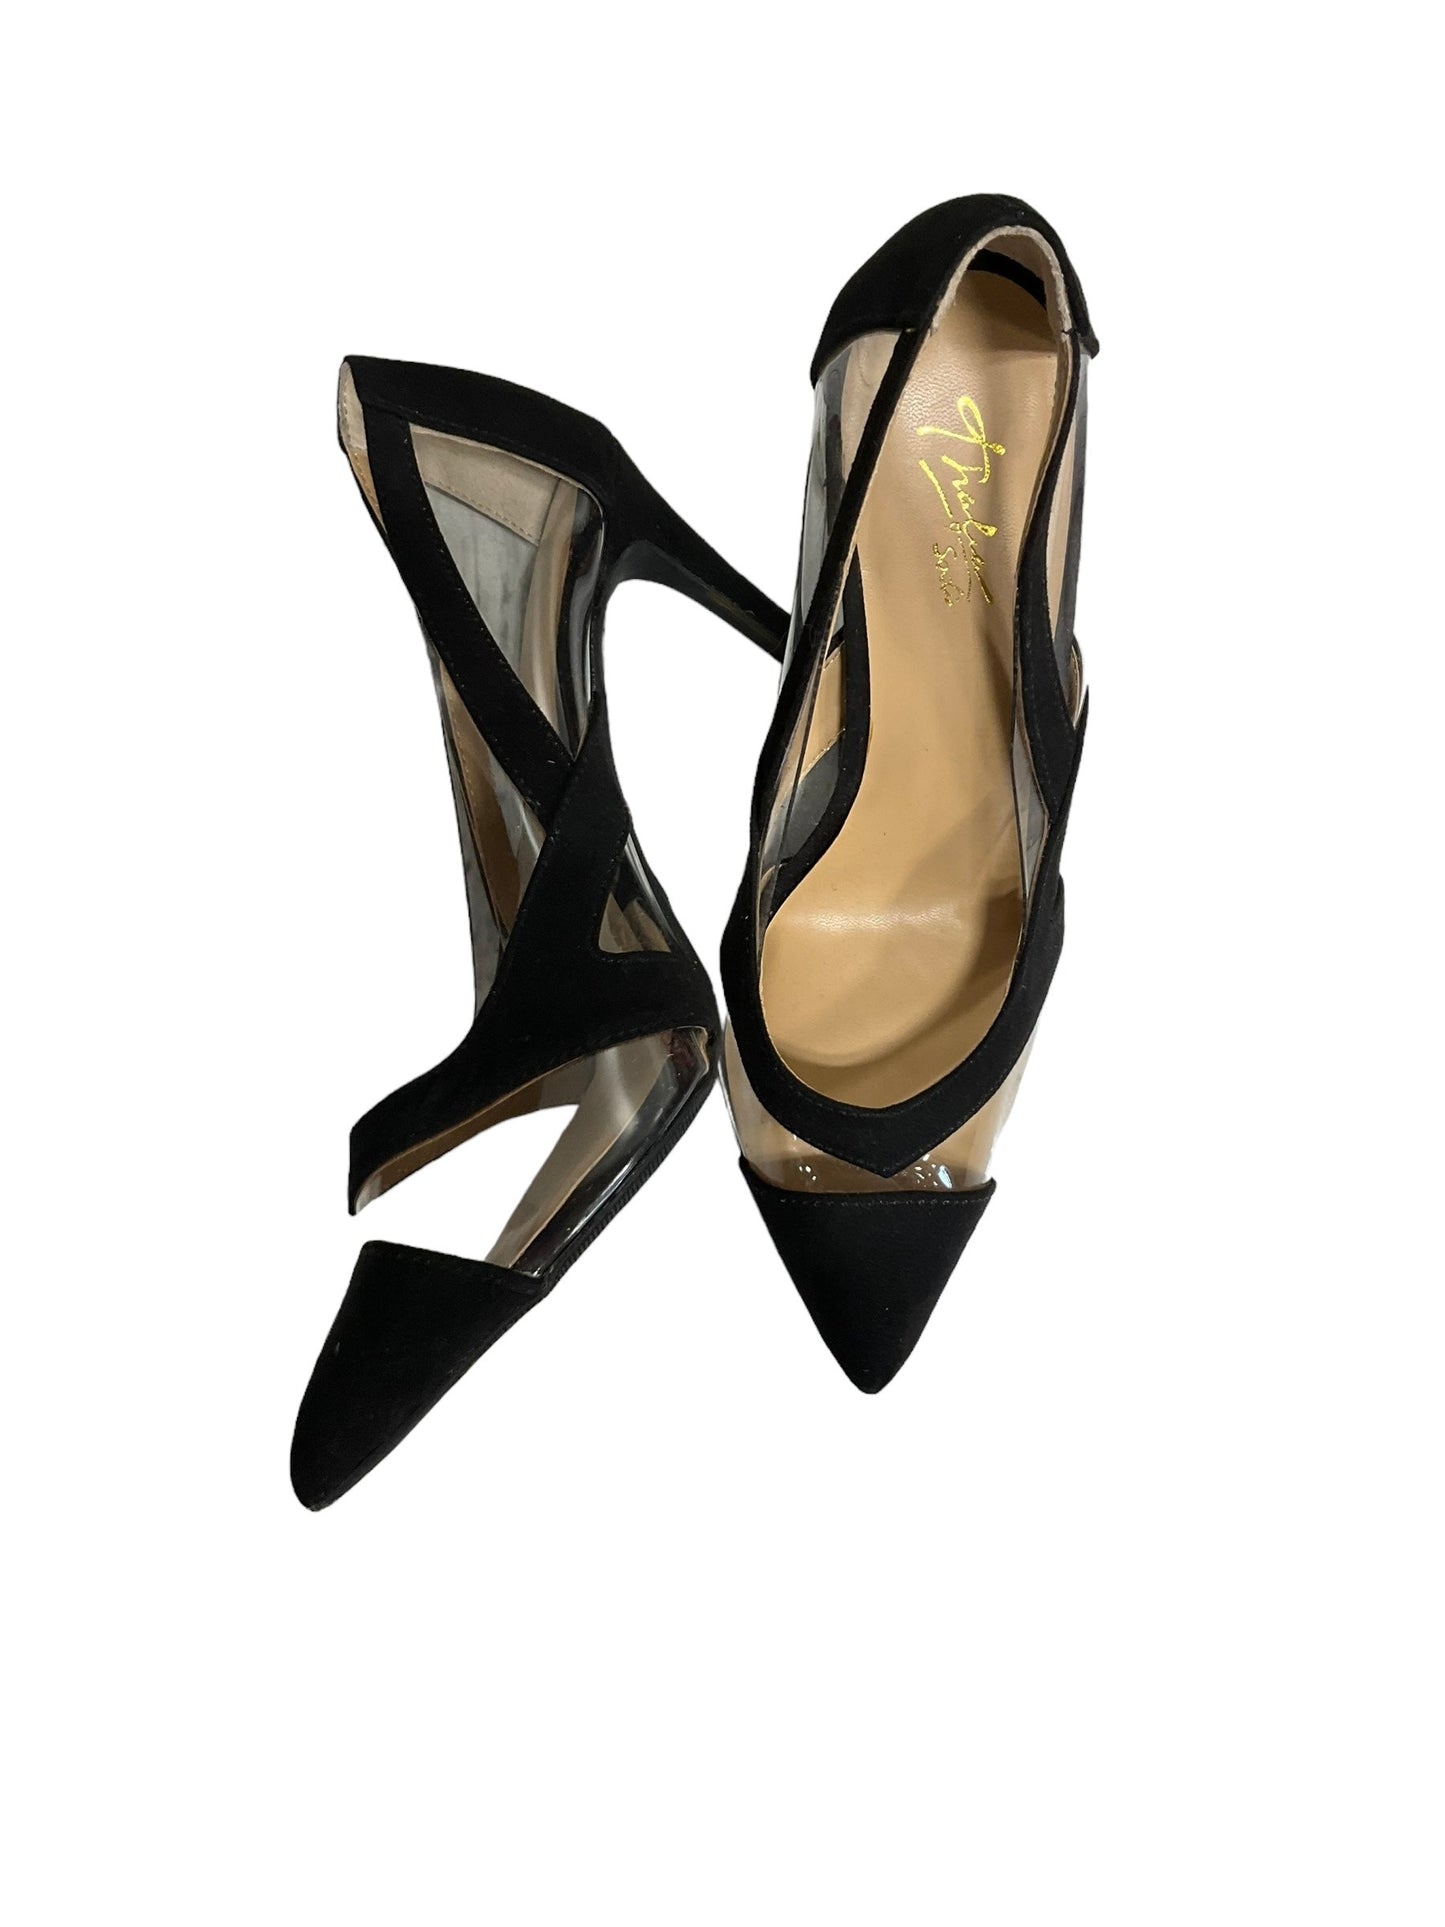 Black Shoes Heels Stiletto Thalia Sodi, Size 8